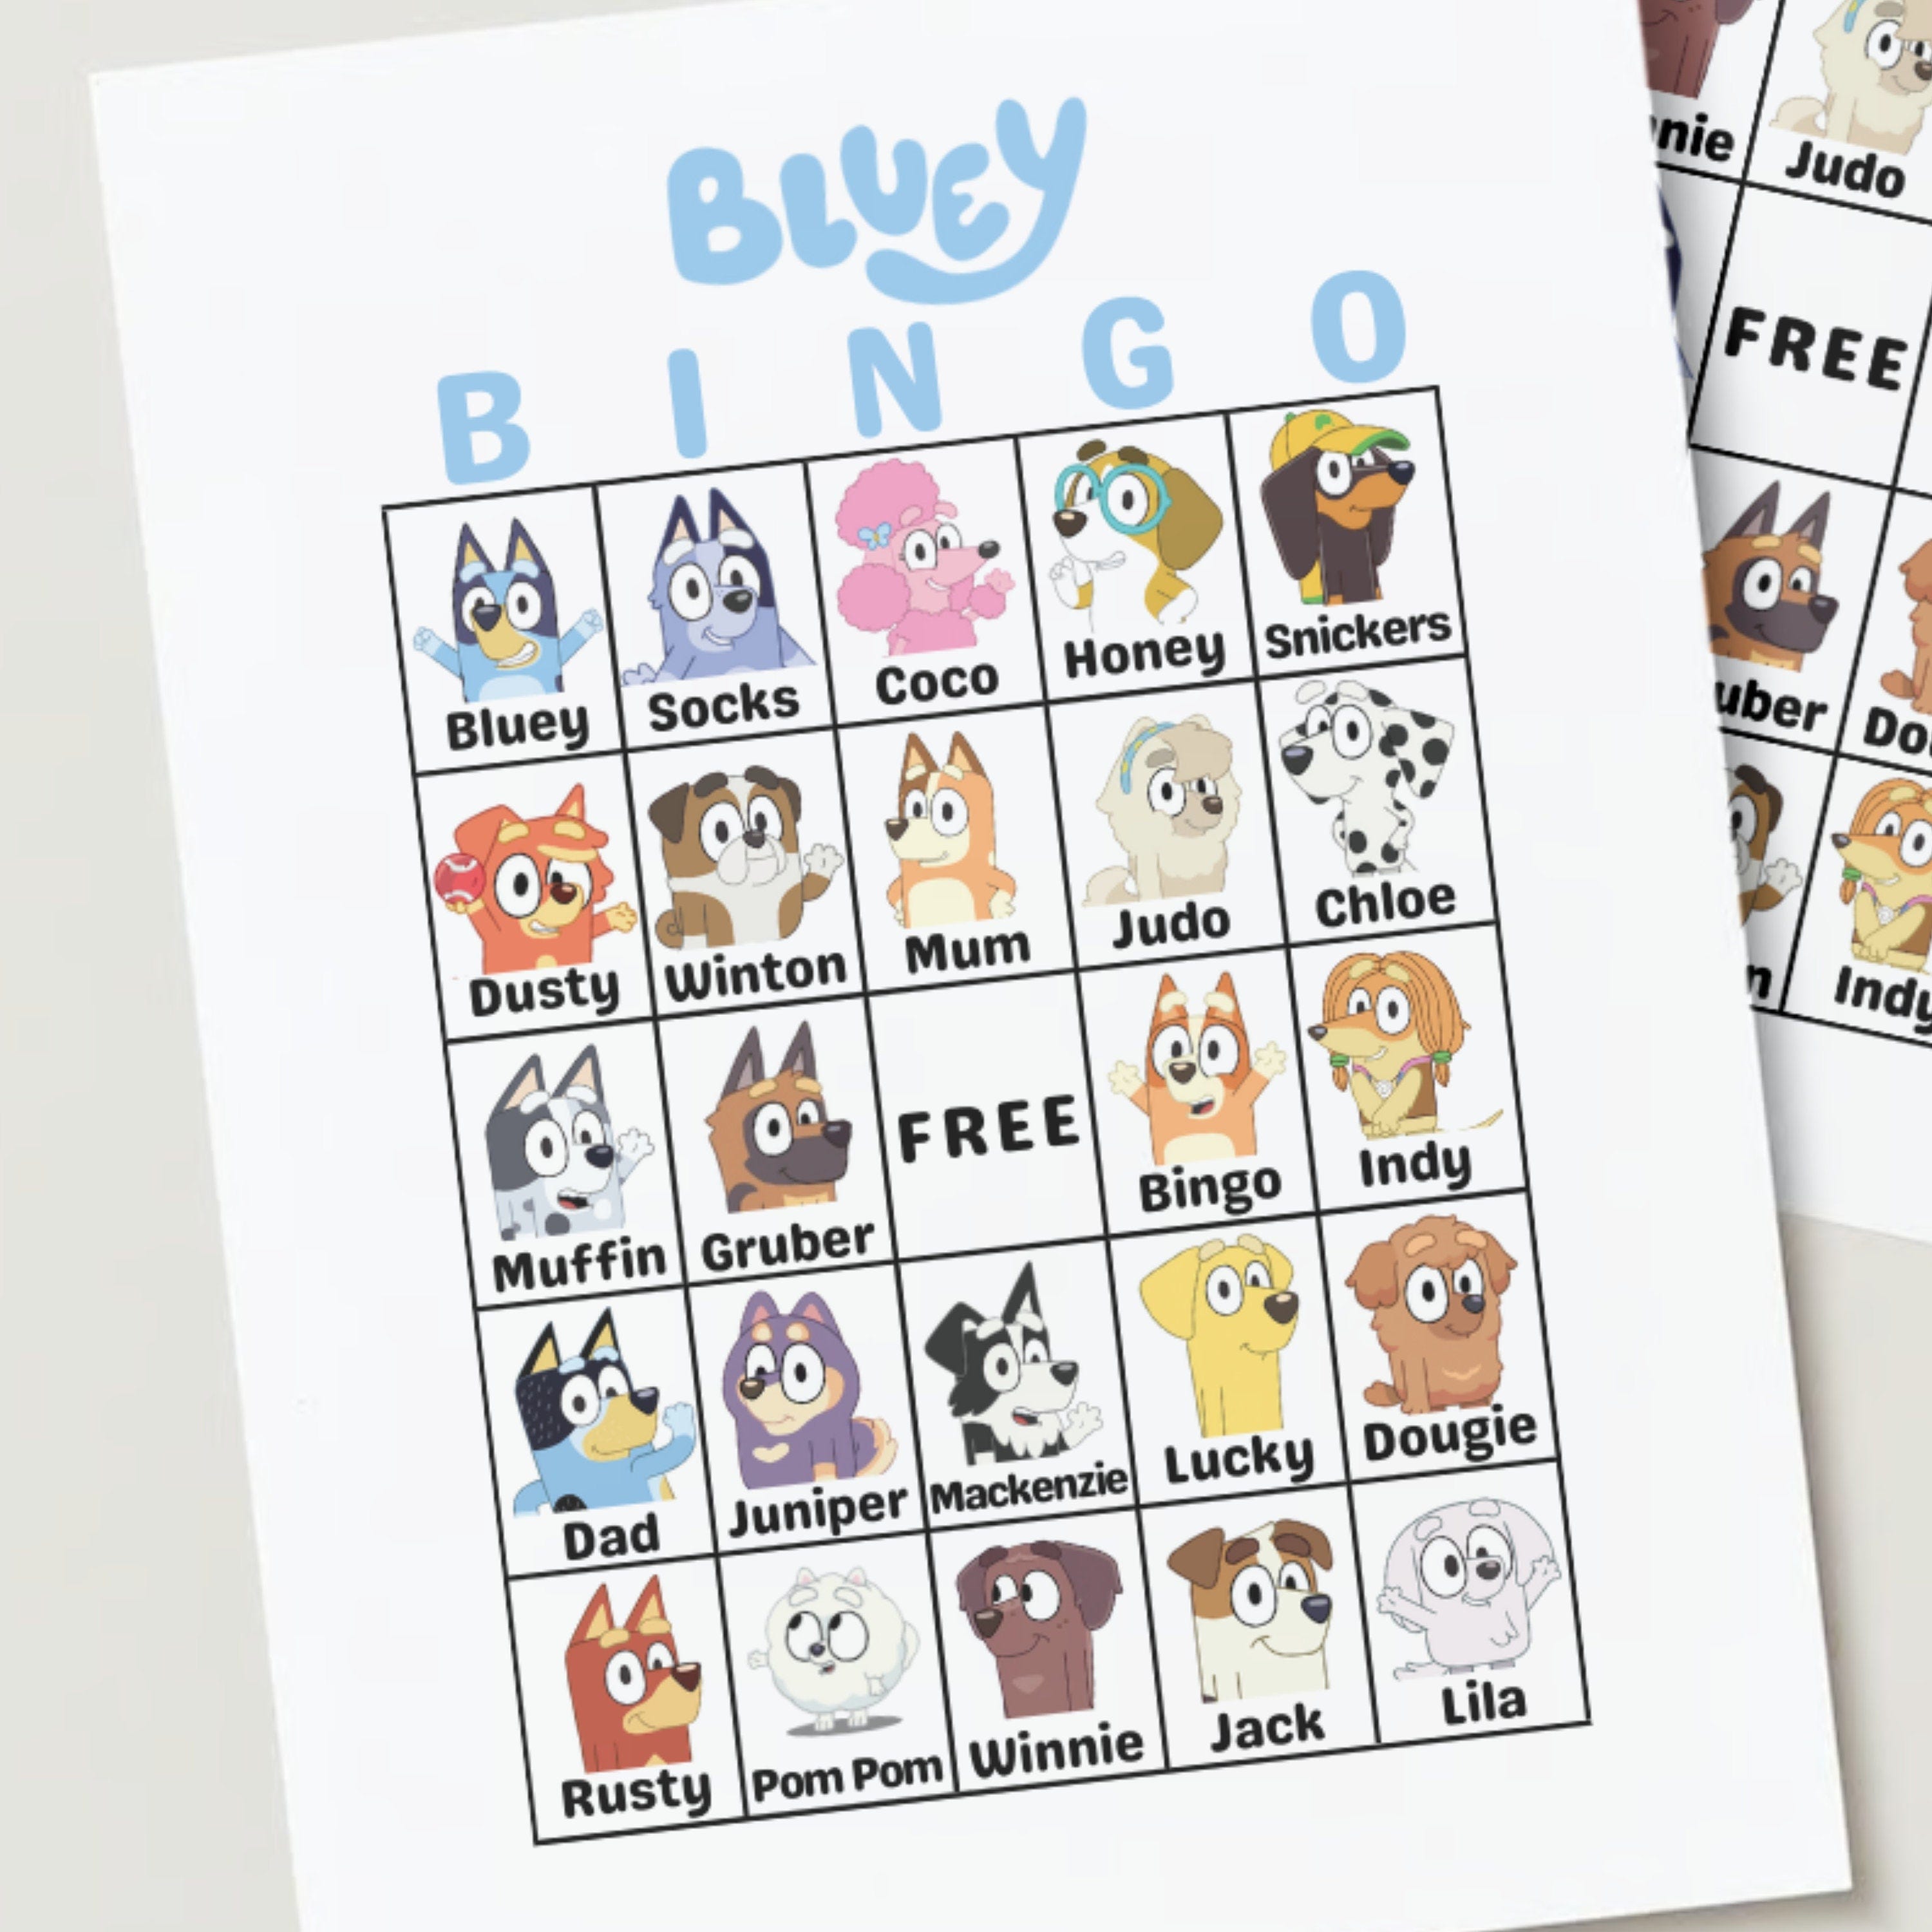 20 Unique Bluey Bingo Cards - Preschool, Kindergarten, Elementary Education ; PDF Printable Files Instant Download